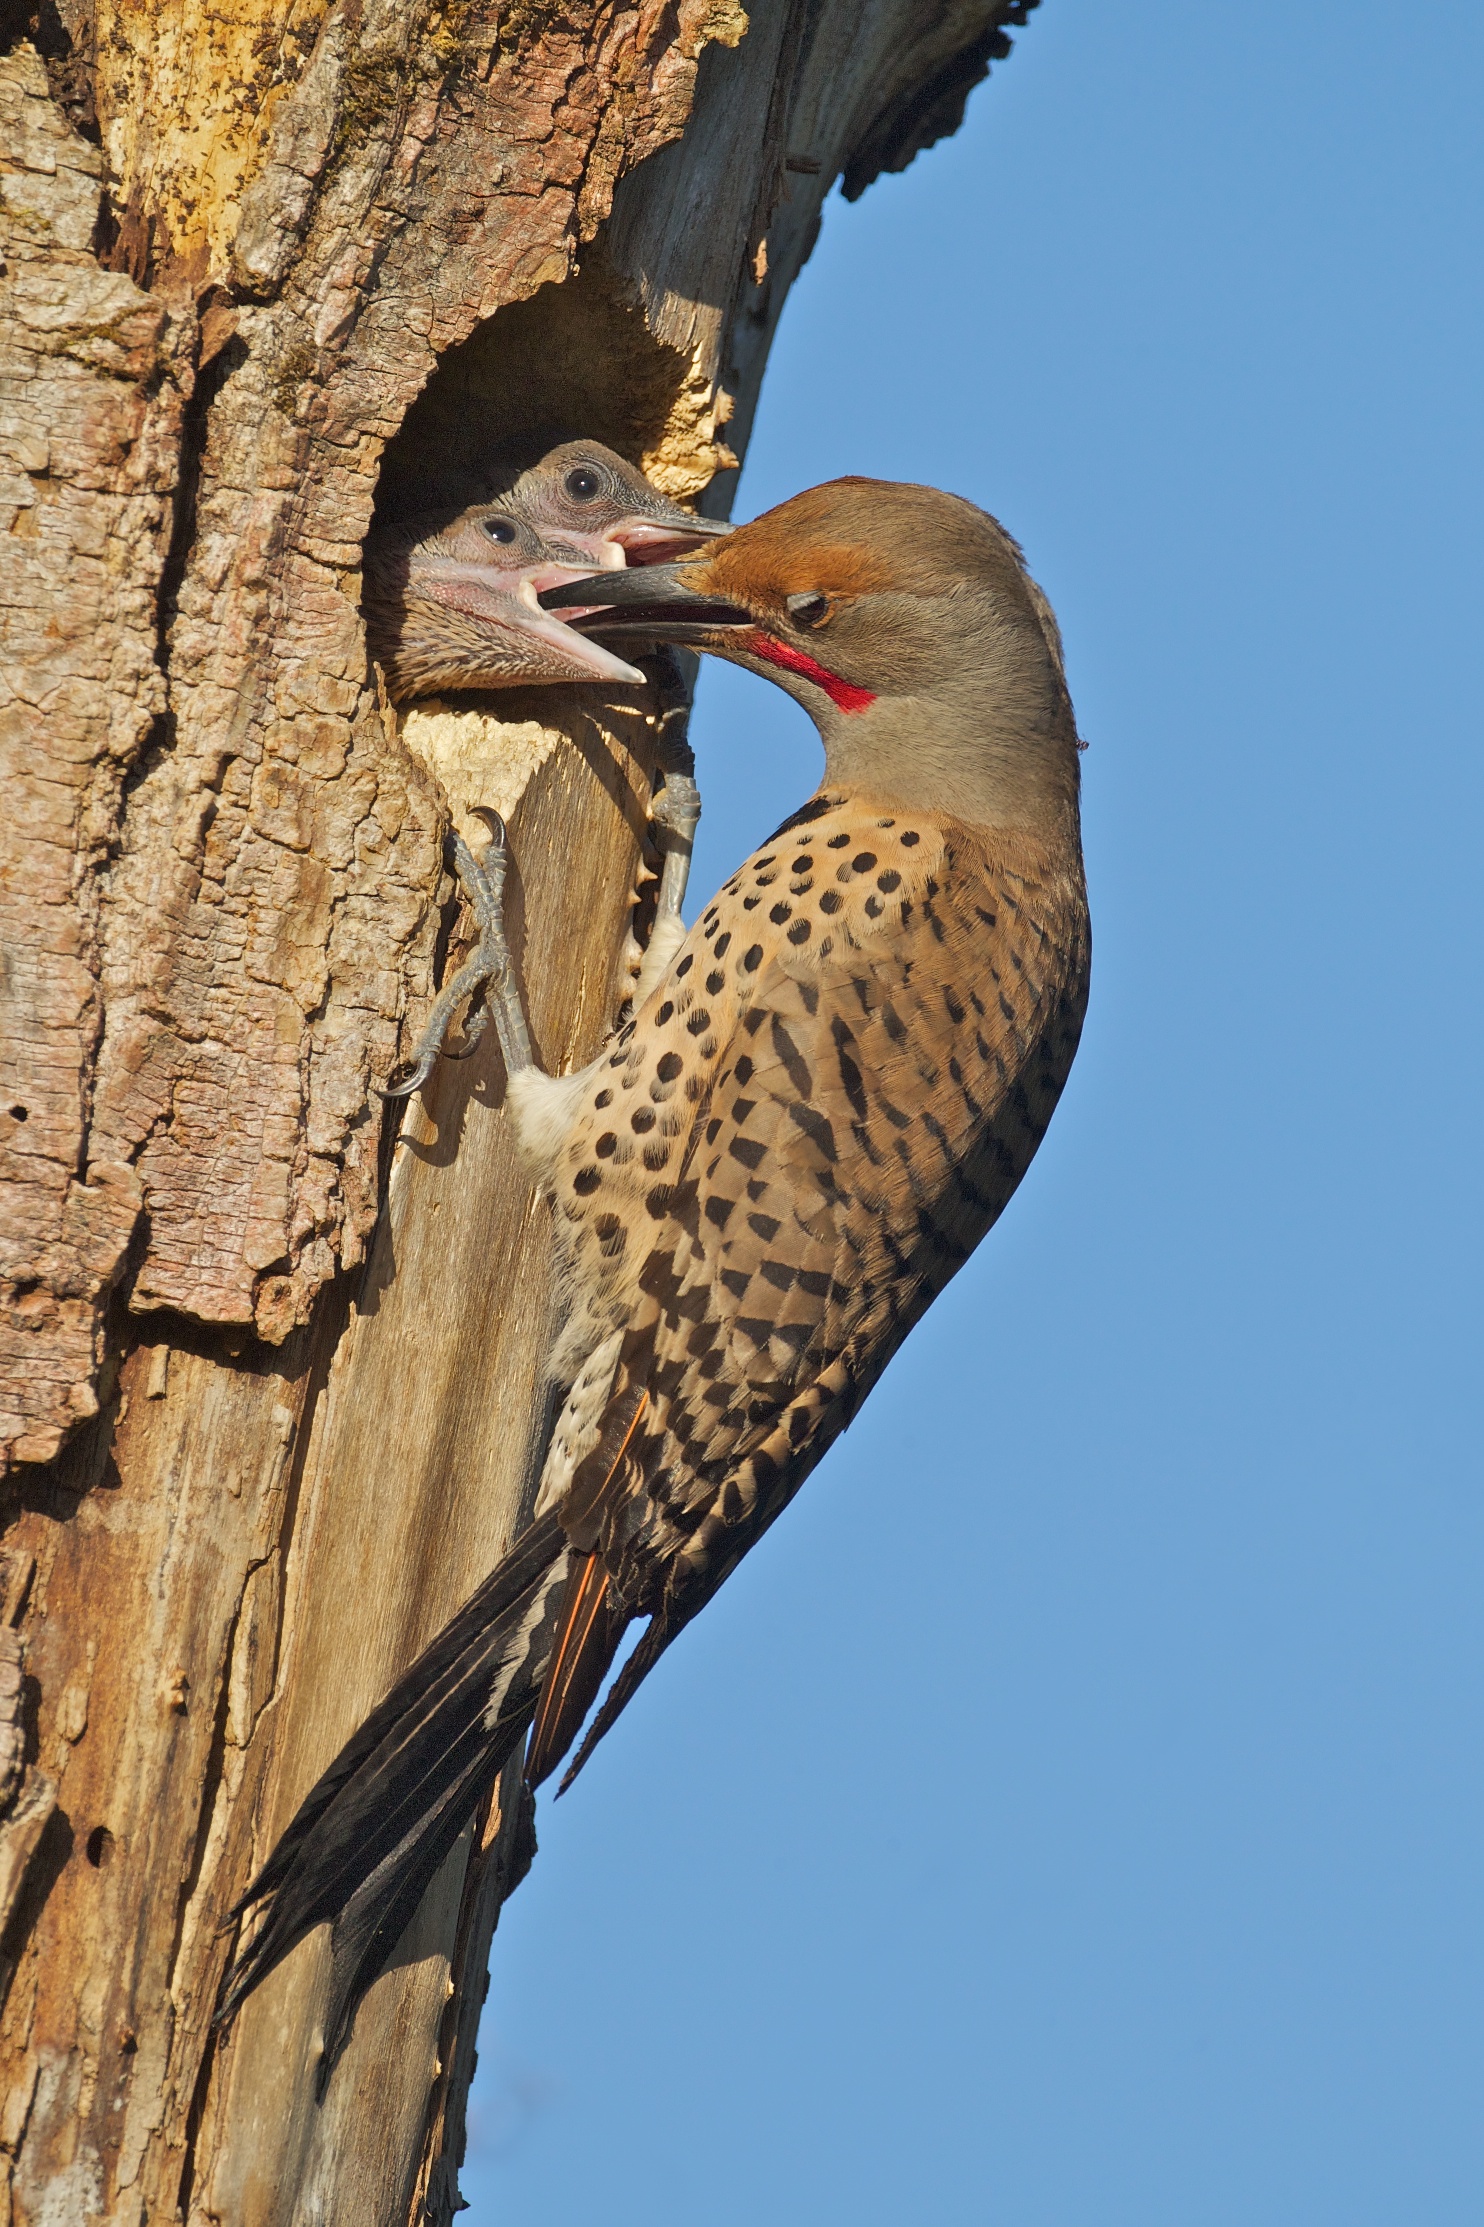 woodpecker sounds